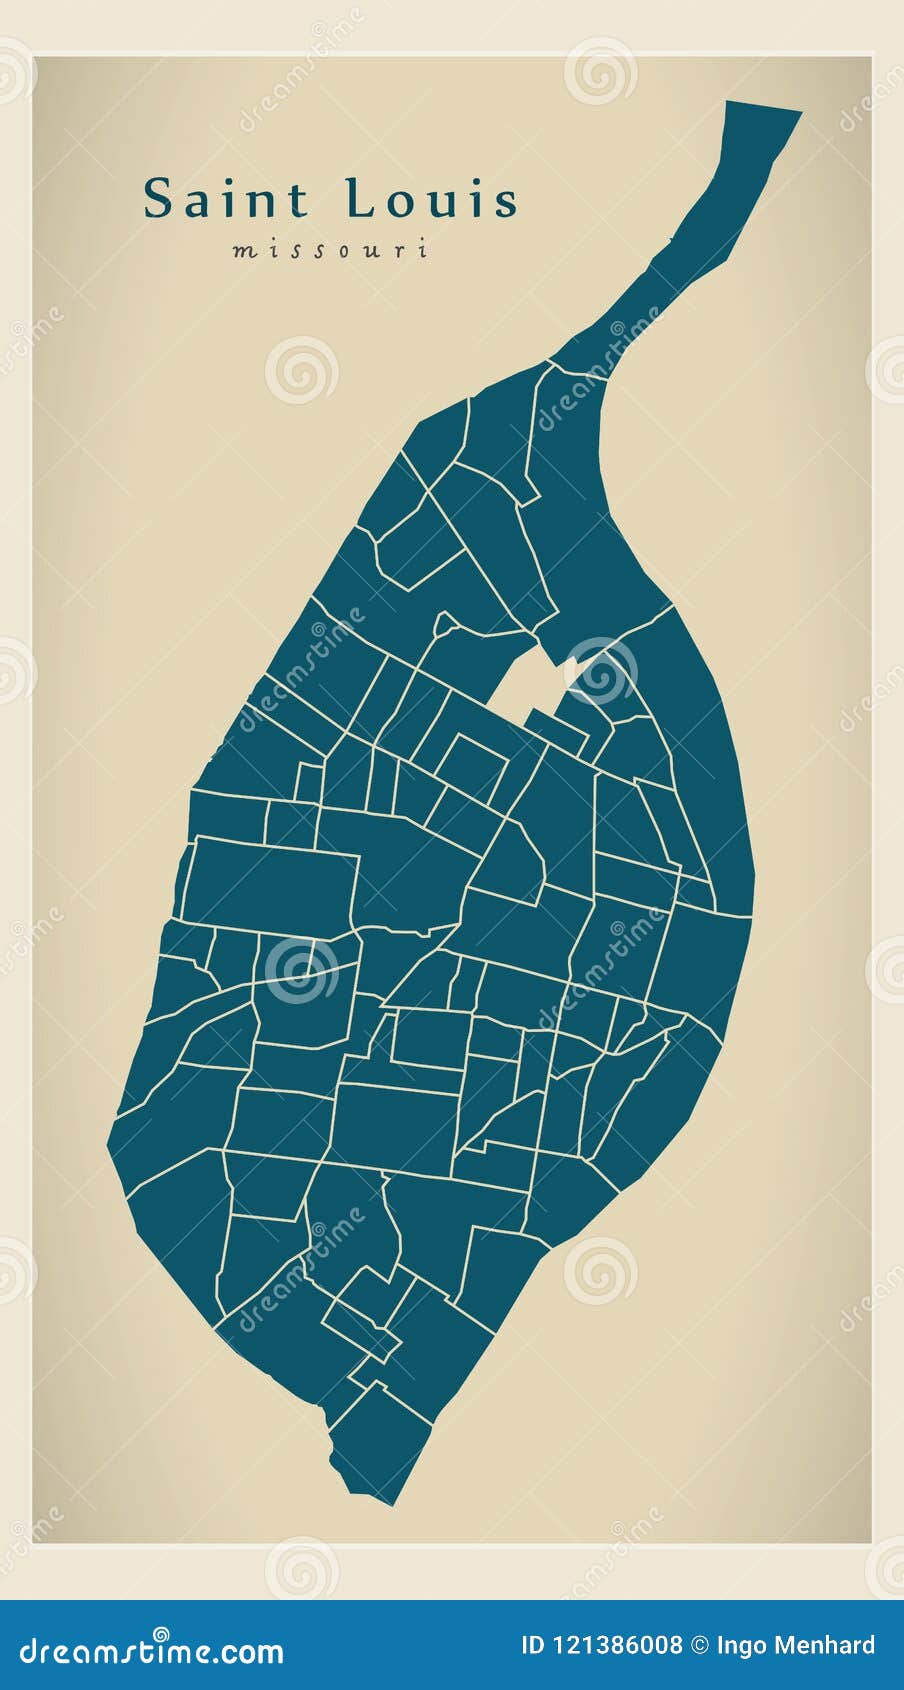 Modern City Map - Saint Louis Missouri City Of The USA With Neighborhoods Stock Vector ...